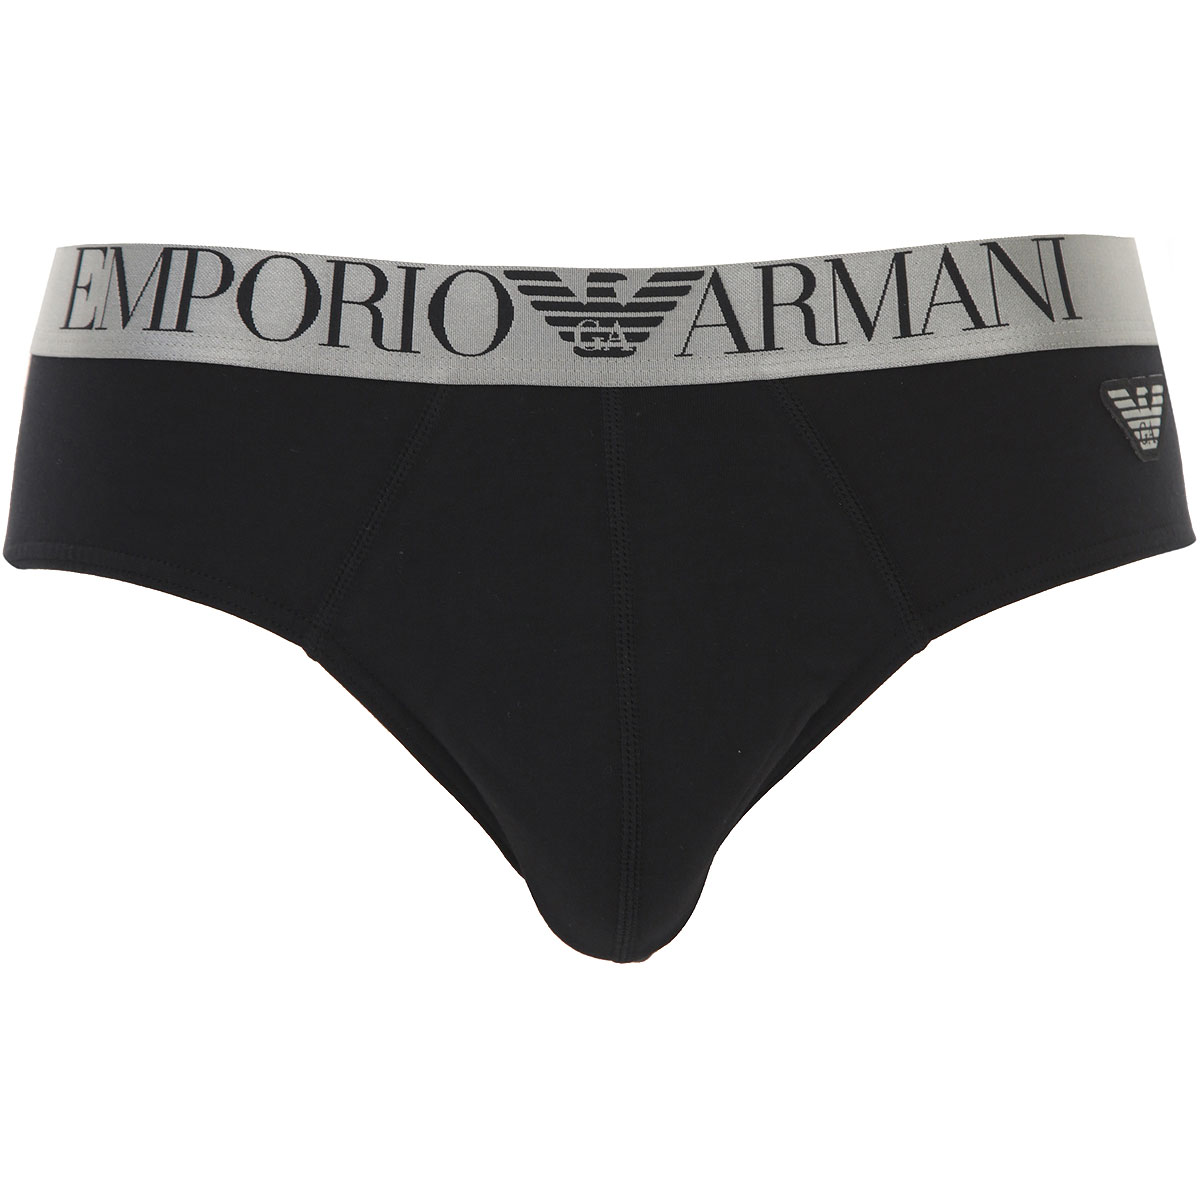 Mens Underwear Emporio Armani, Style code: 110814-1p512-00020